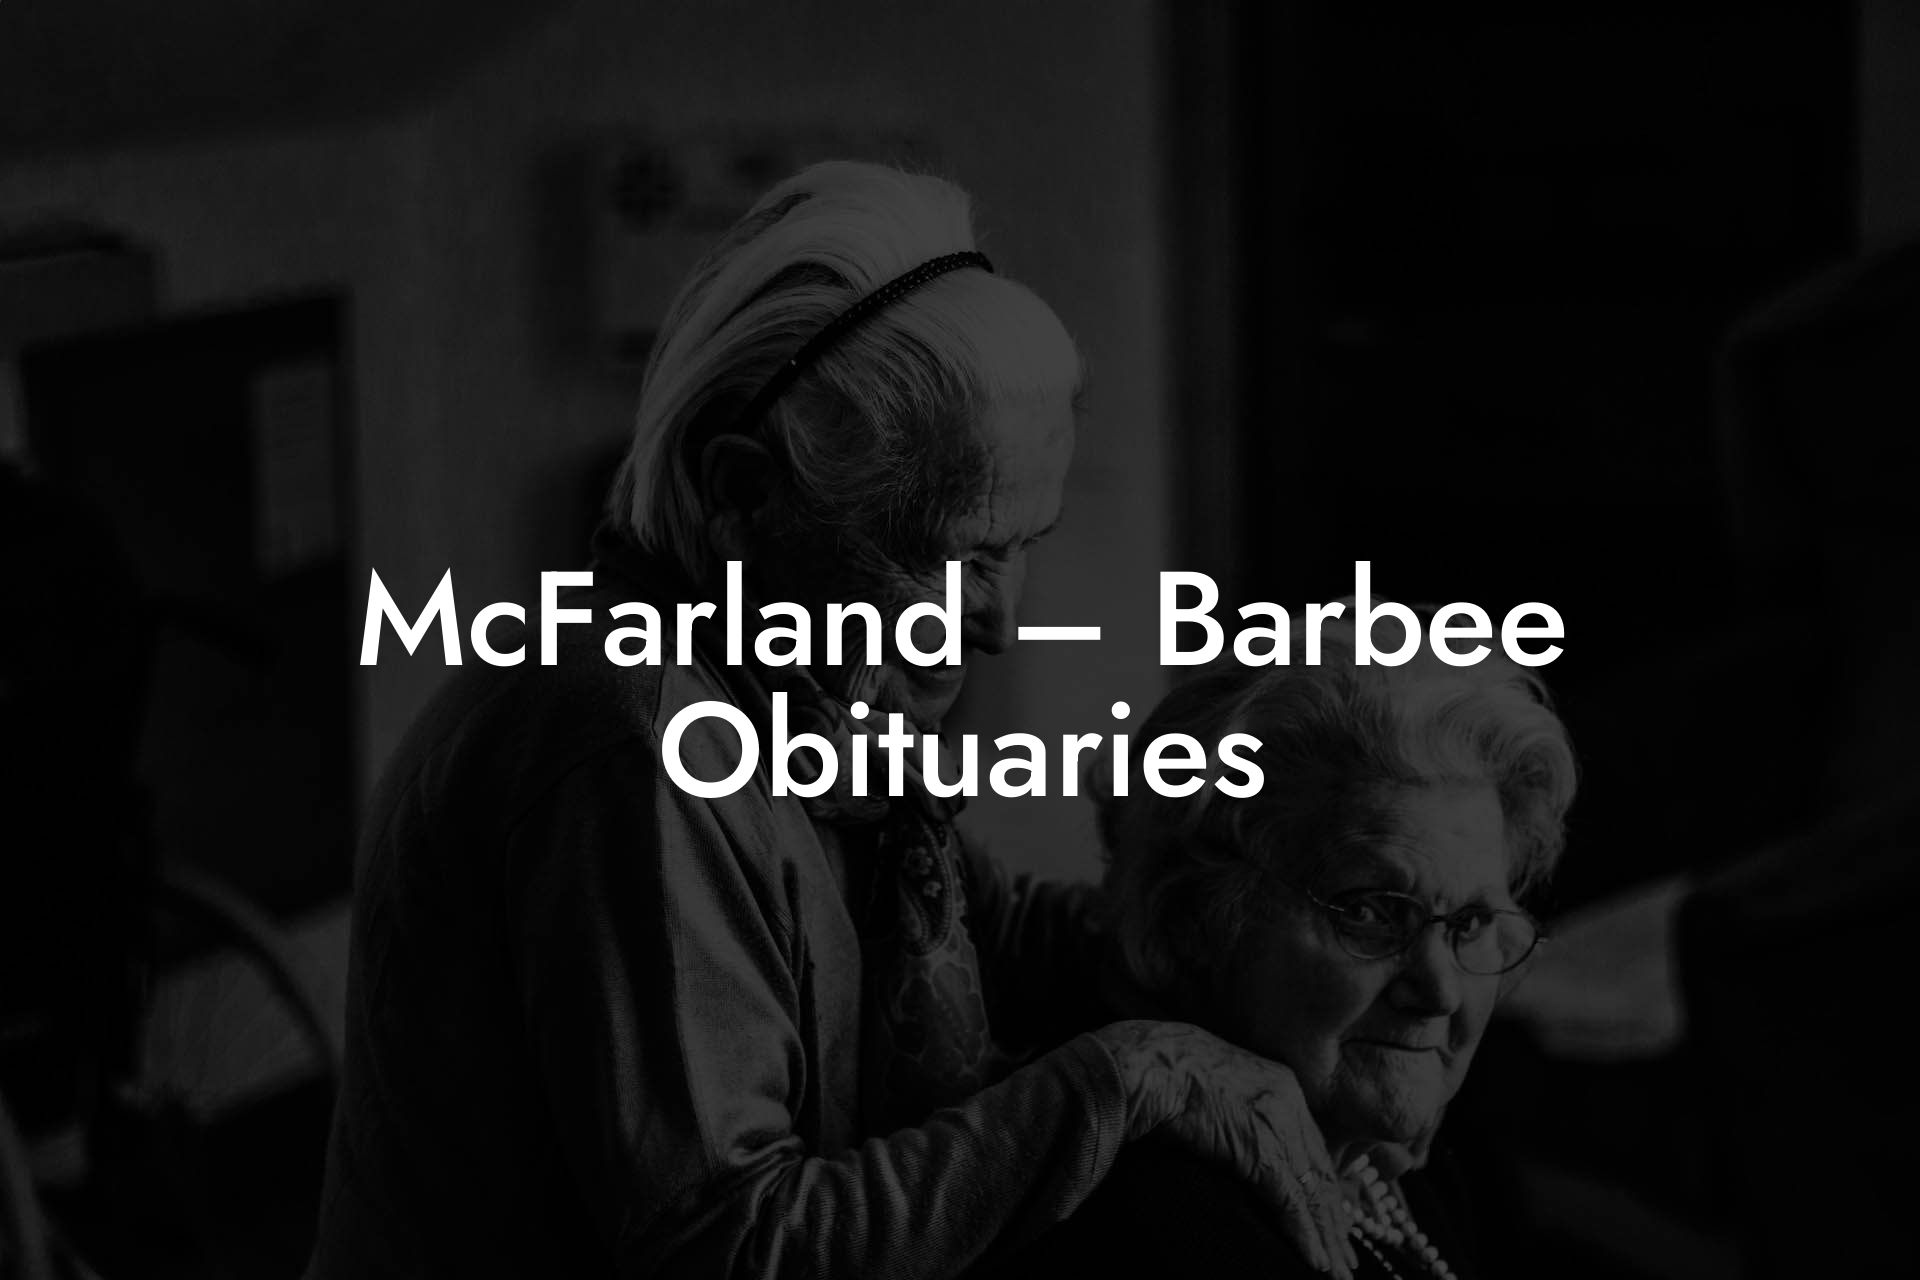 McFarland – Barbee Obituaries